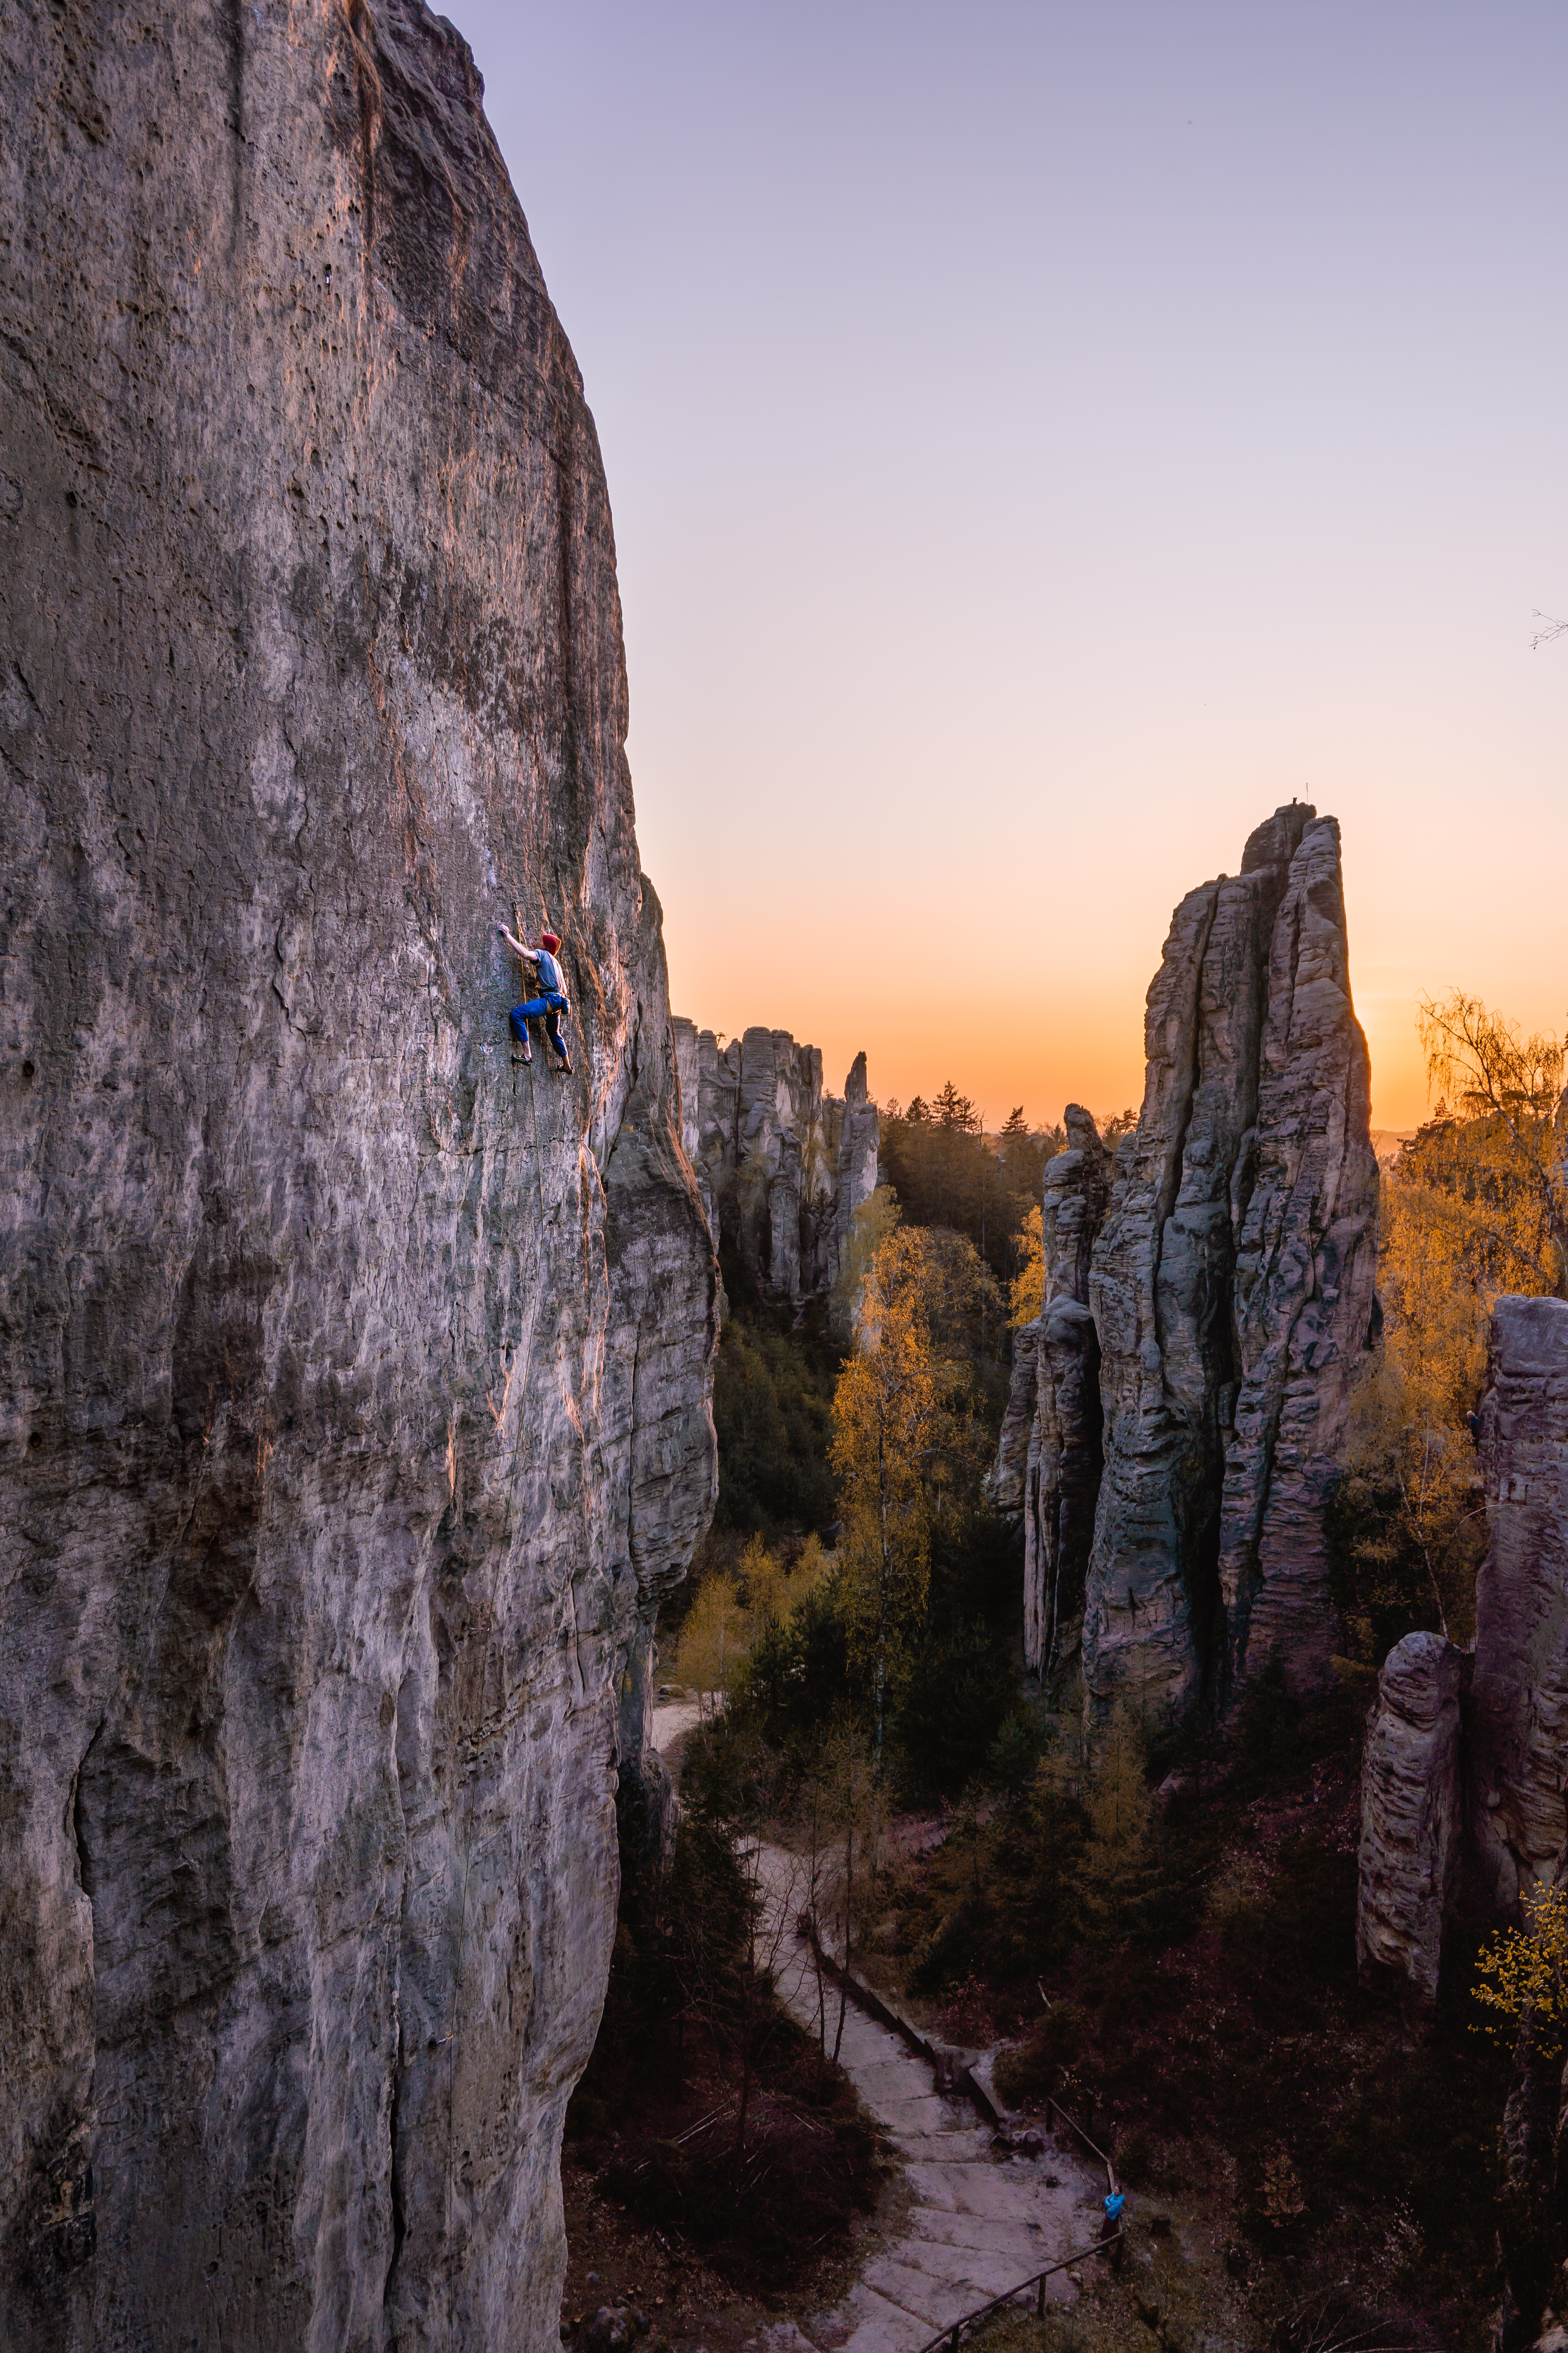 A climber on the sandstone towers of Cesky Raj, Czech Republic